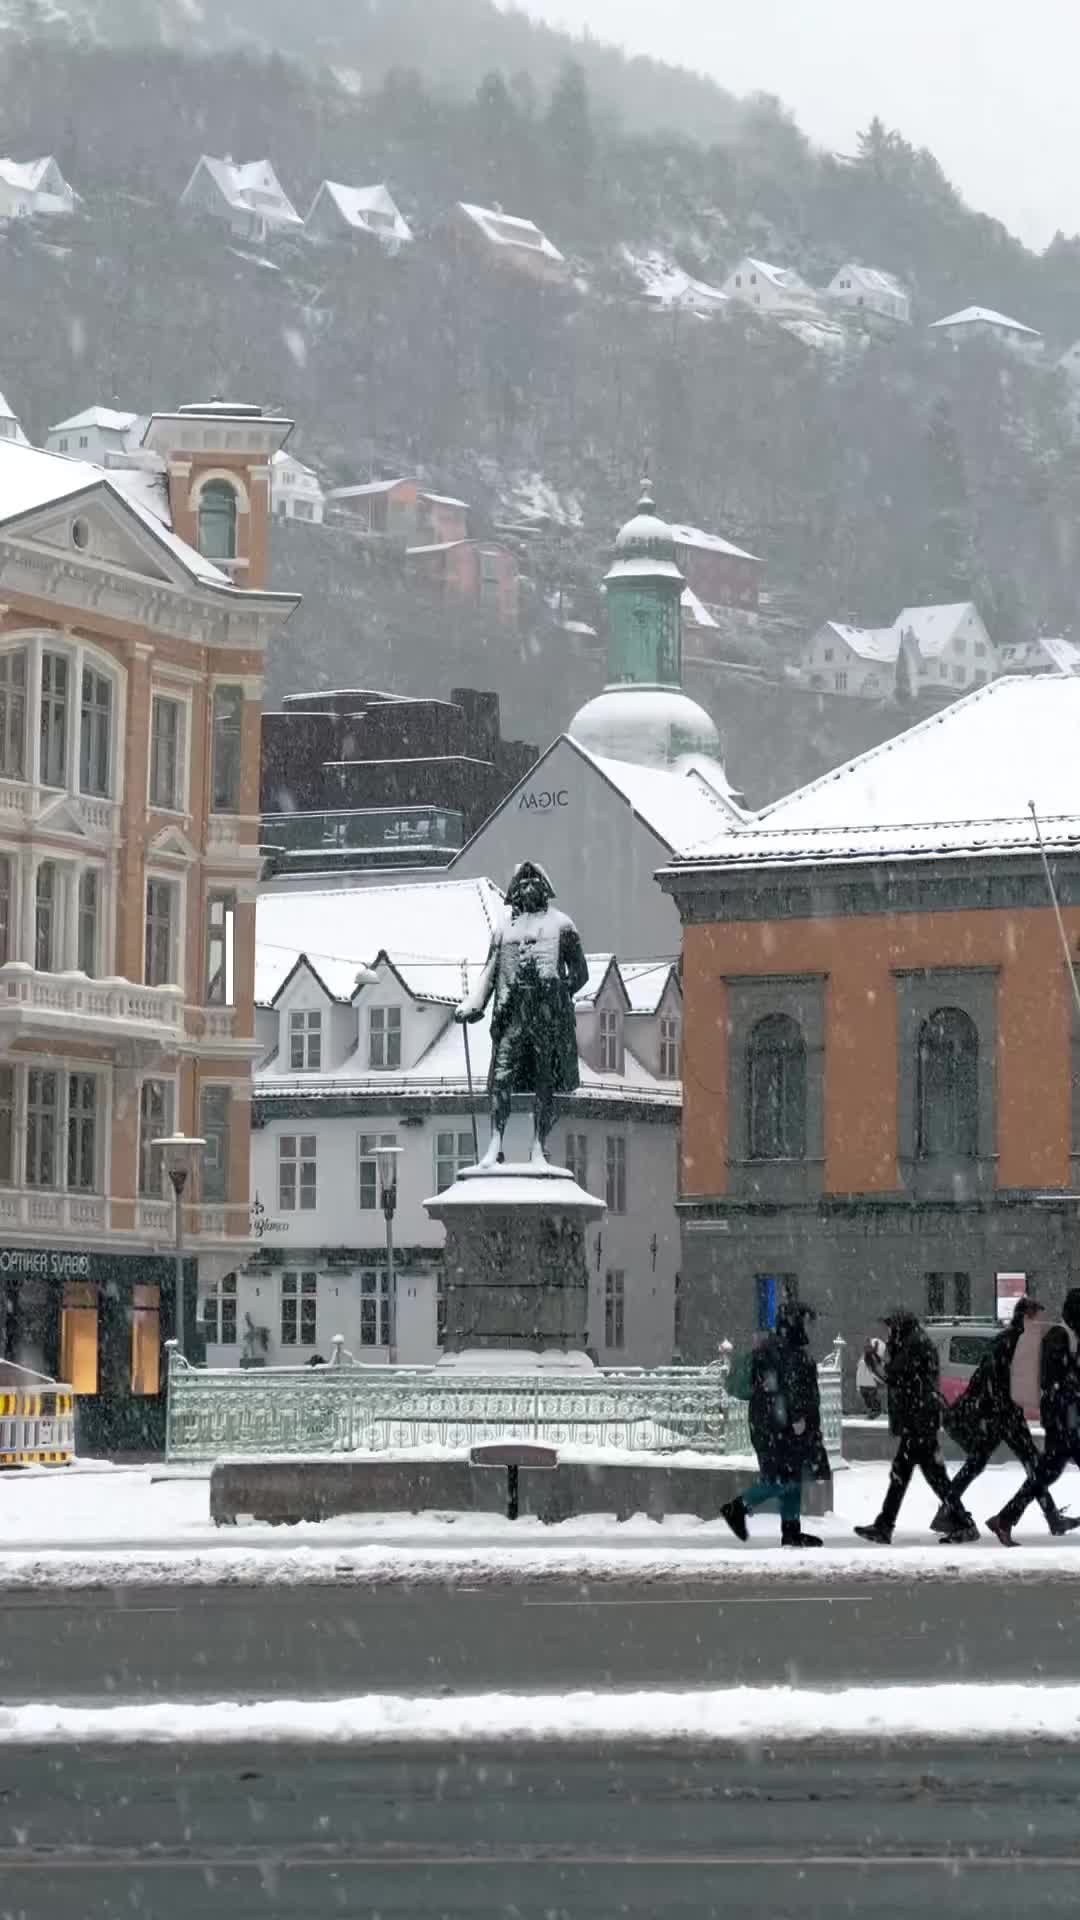 Snowfall in Bergen: A Winter Wonderland in Norway